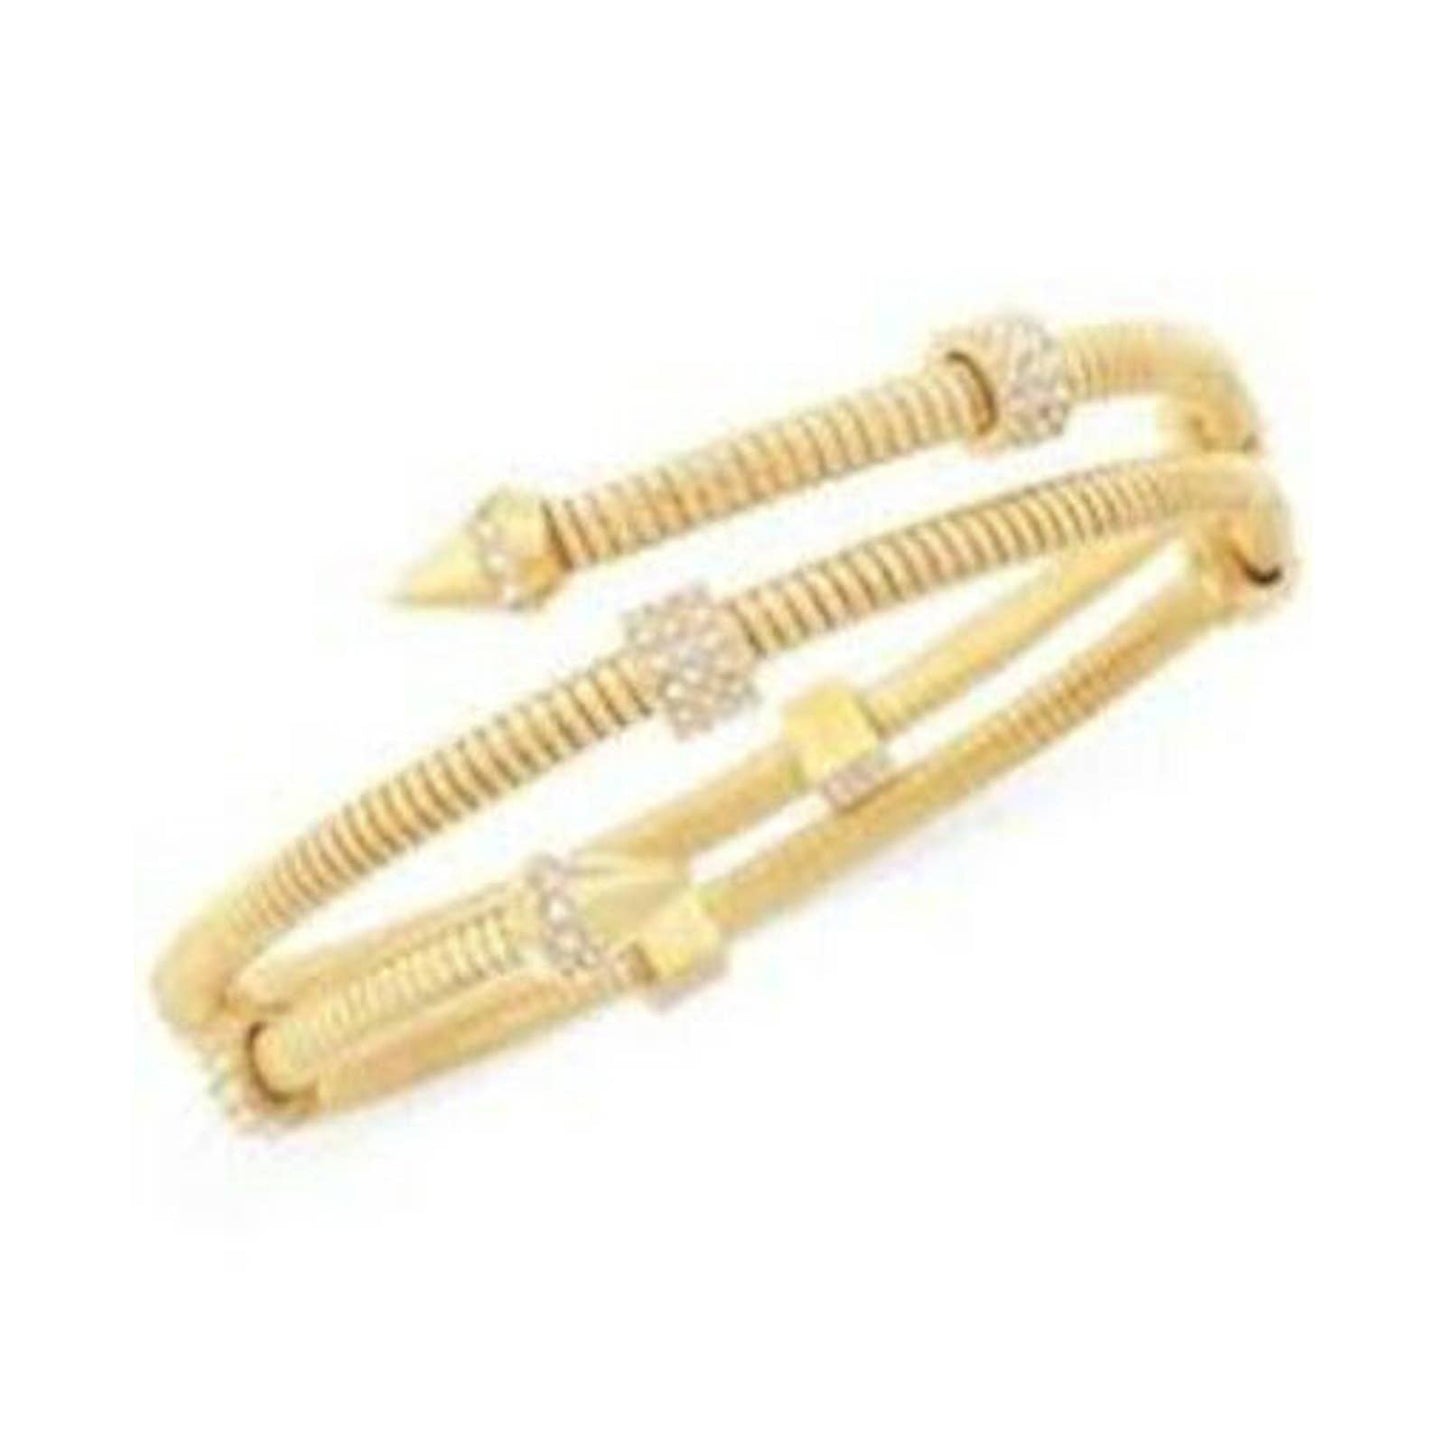 VINCE CAMUTO, Gold Coil Bracelet w/ Arrow & Crysyal Details, NWT, $68